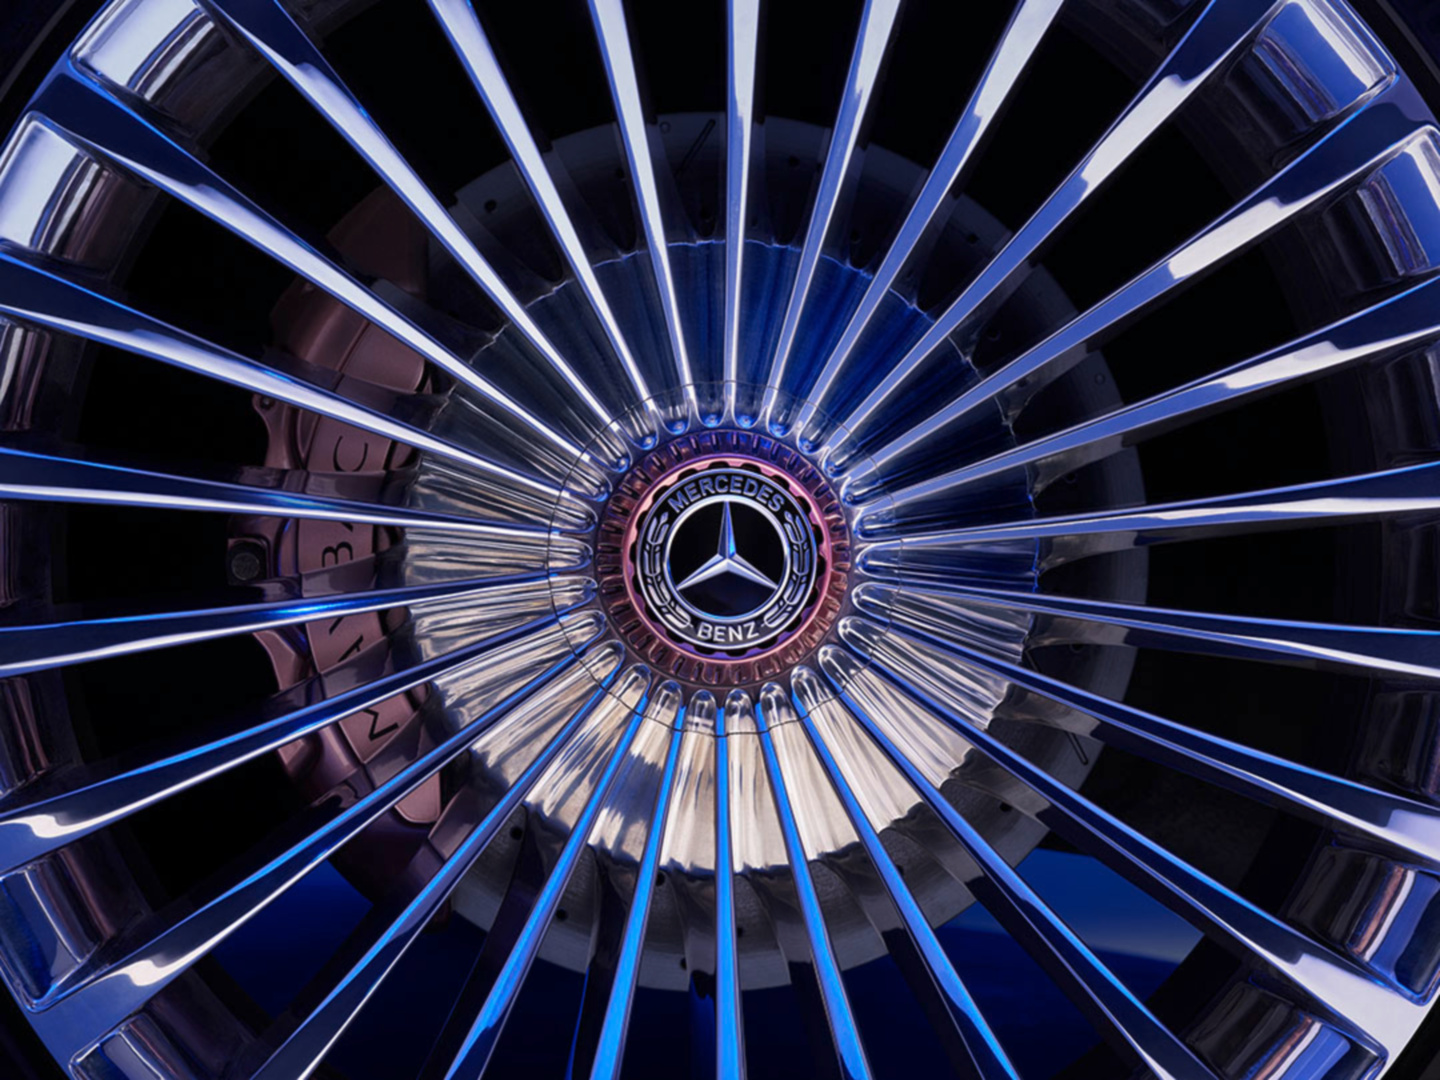 SMALL_圖一：Mercedes-Benz 連續七年榮登全球最有價值豪華汽車品牌